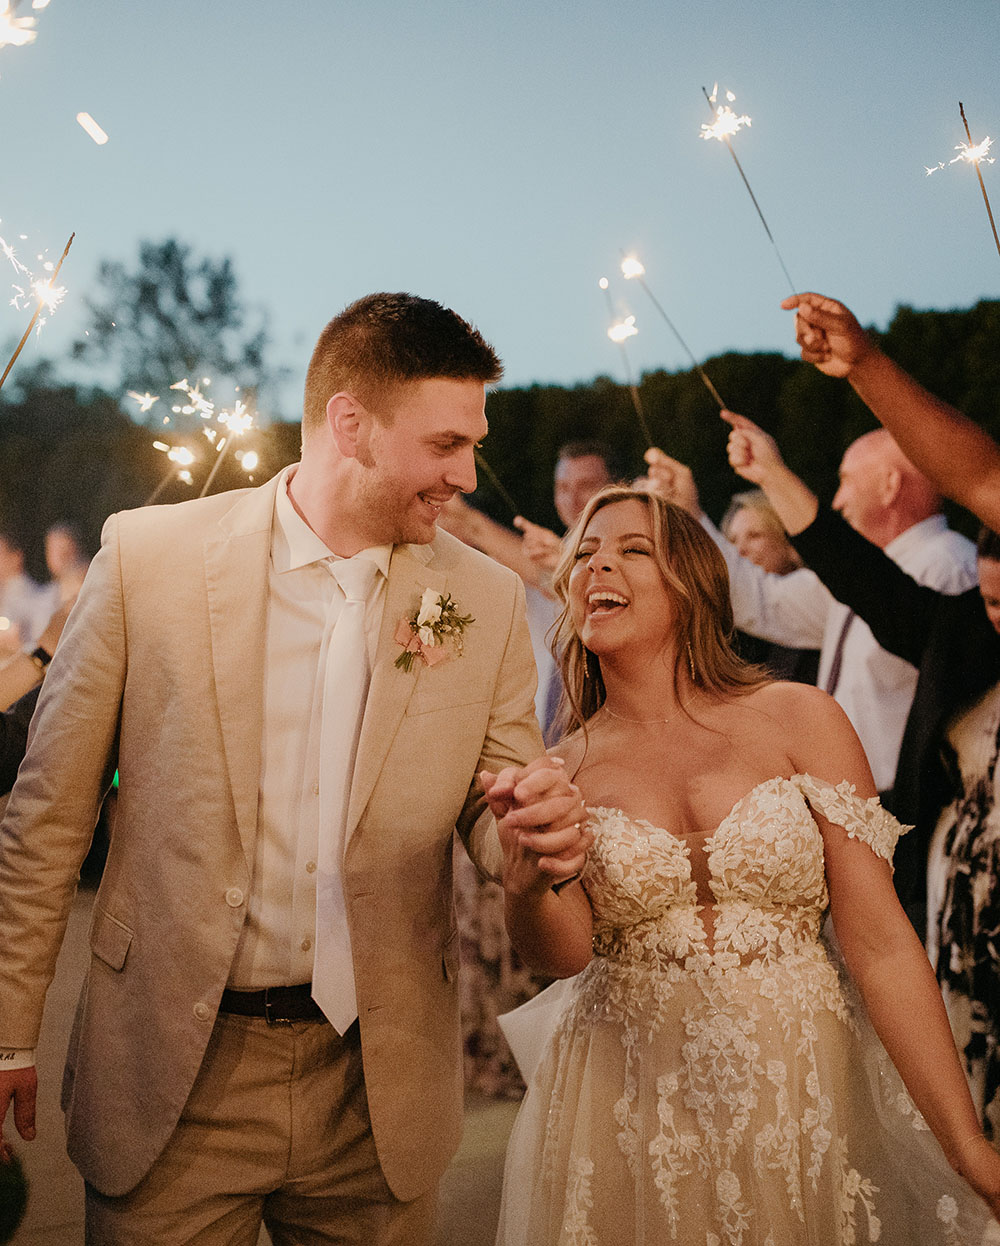 Sparkler sendoff with an off-the-shoulder wedding dress and tan groom suit